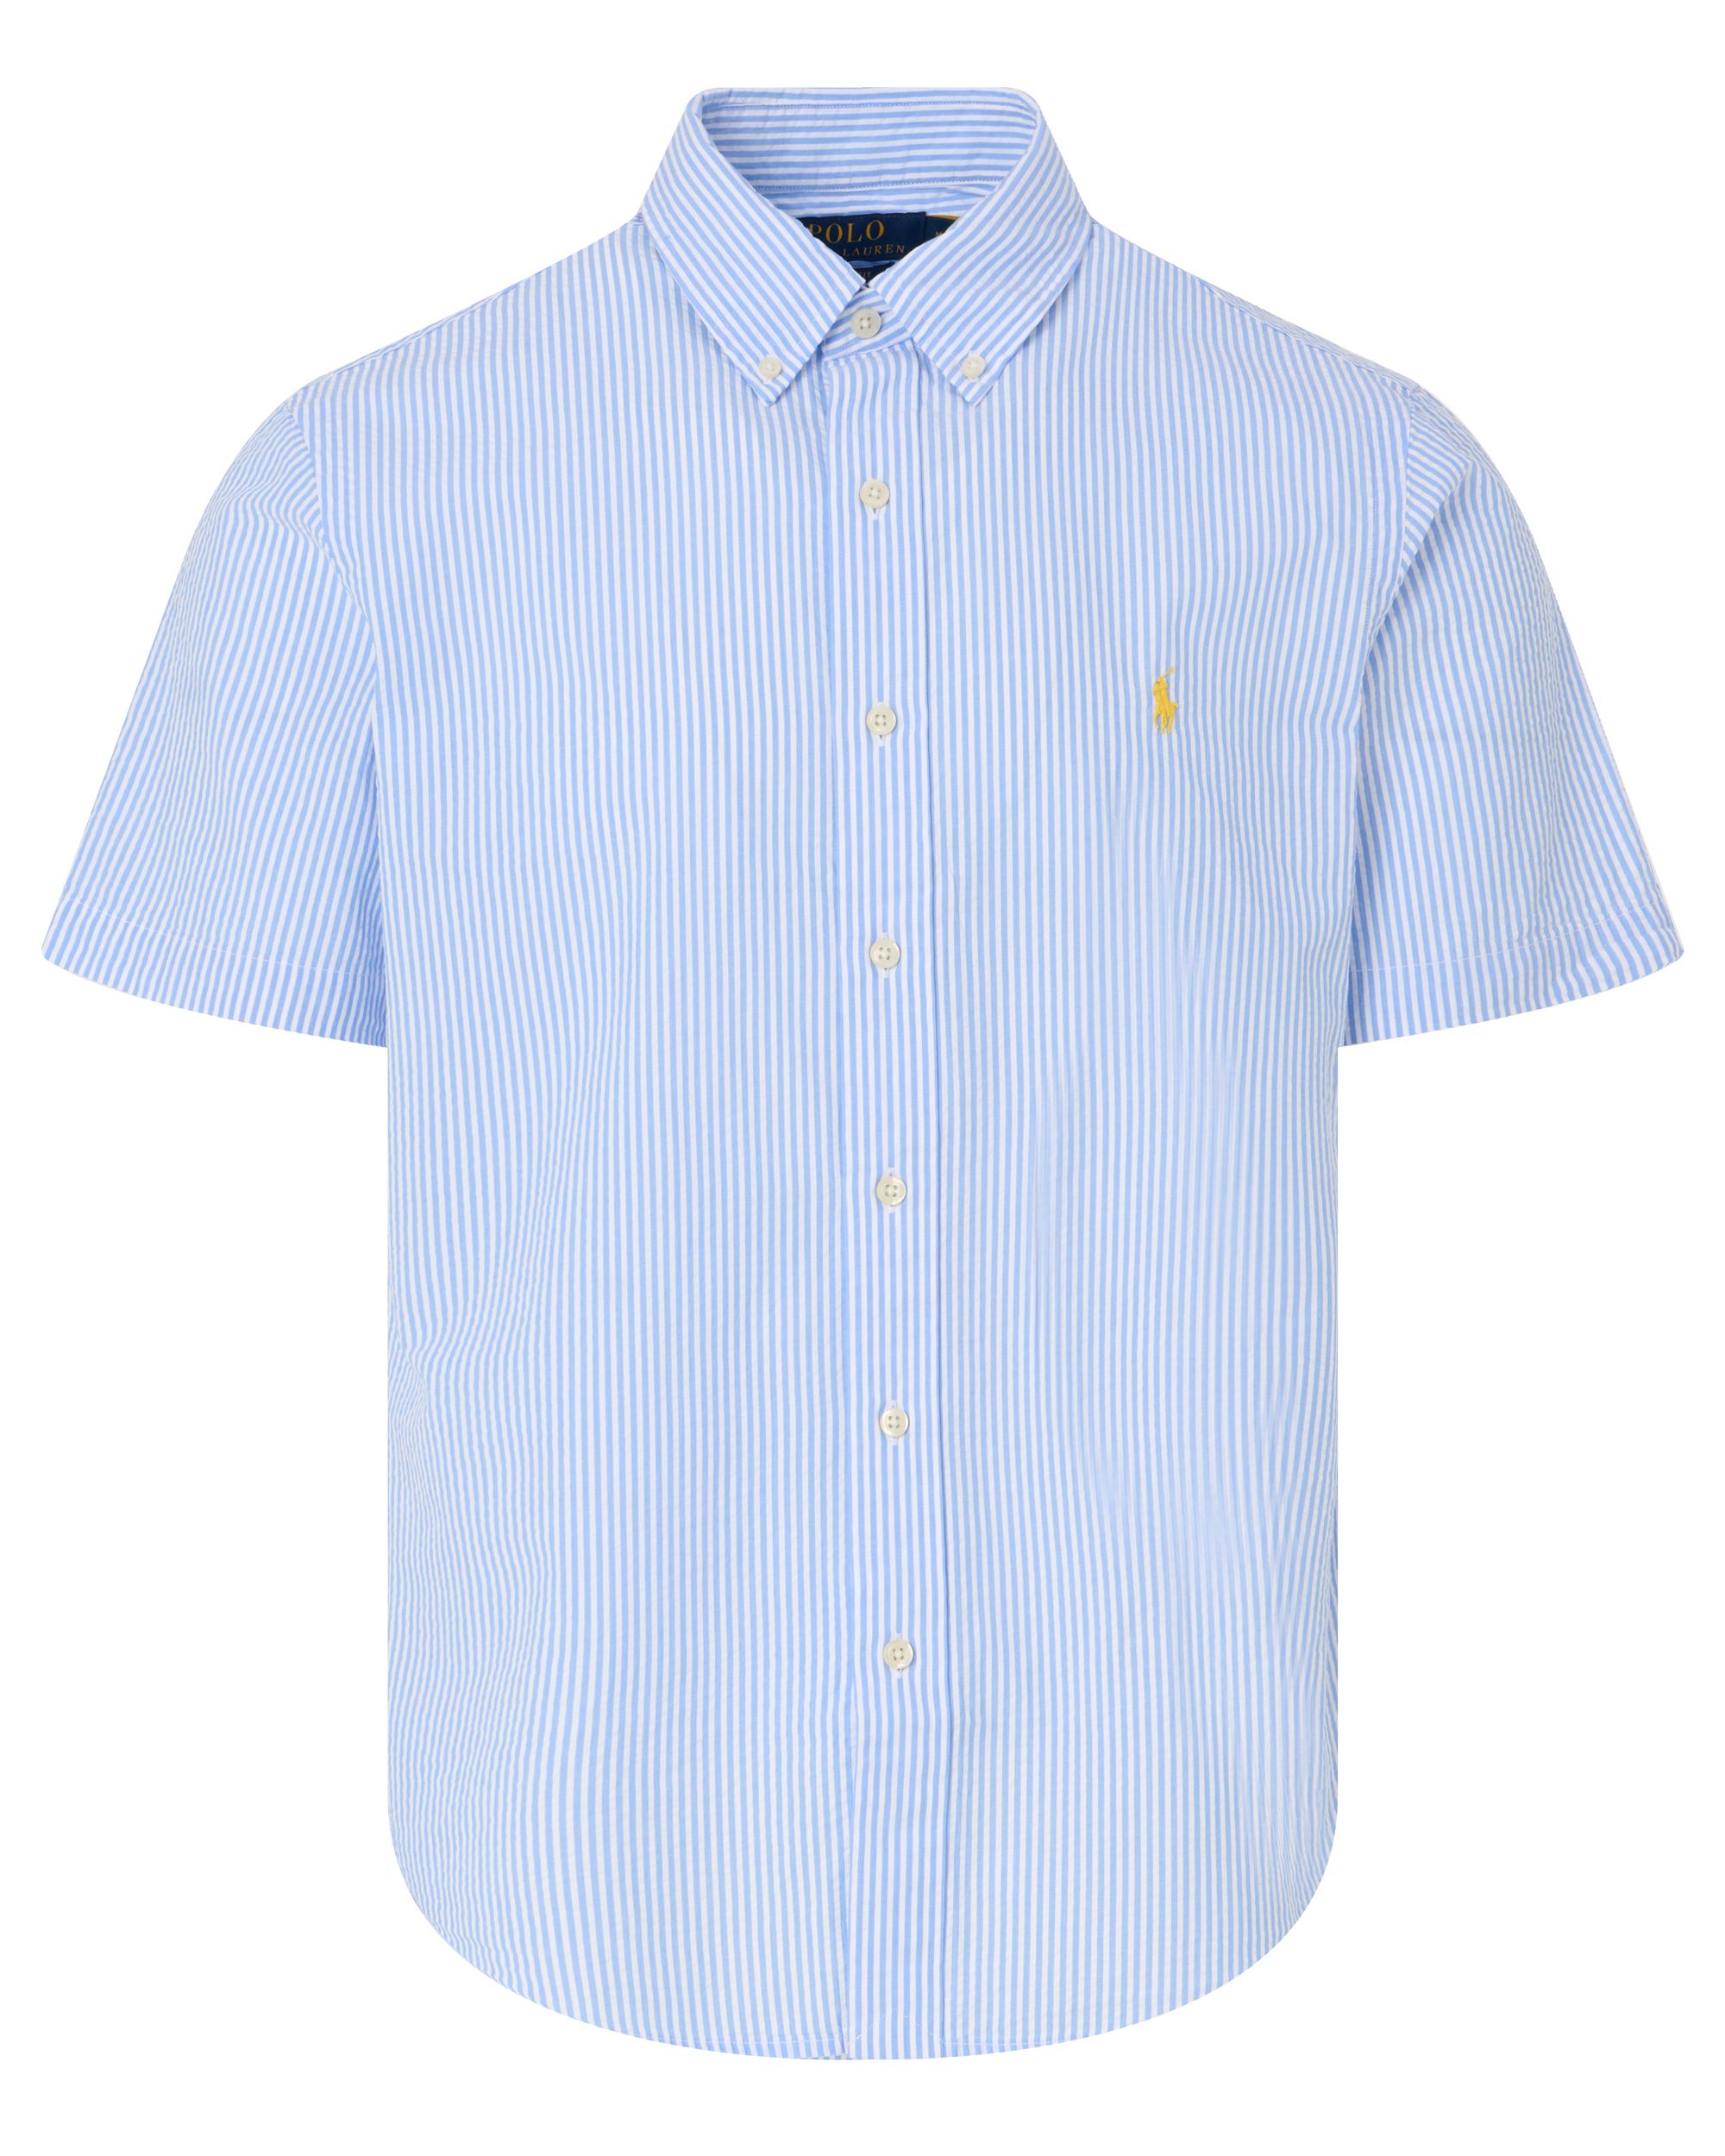 Polo Ralph Lauren Casual Overhemd KM Blauw 095266-001-L